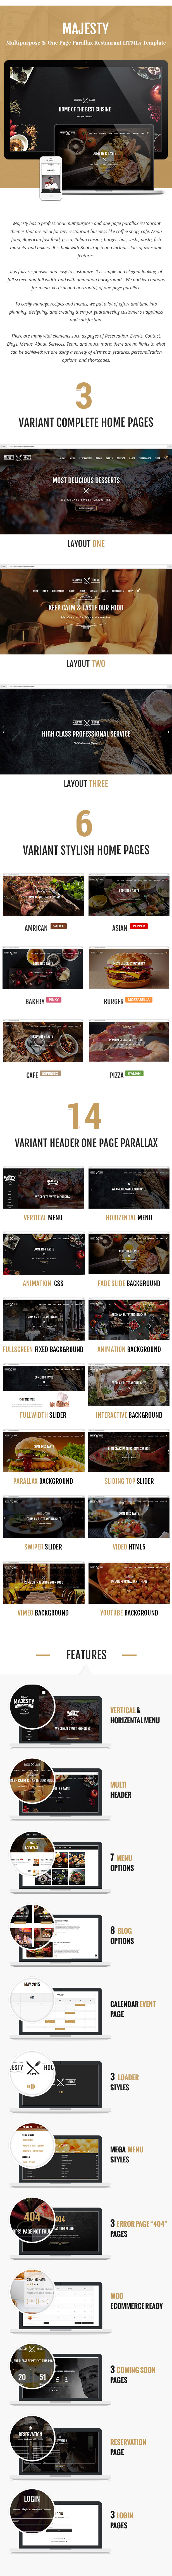 Majesty - Responsive Restaurant HTML5 Template - 8